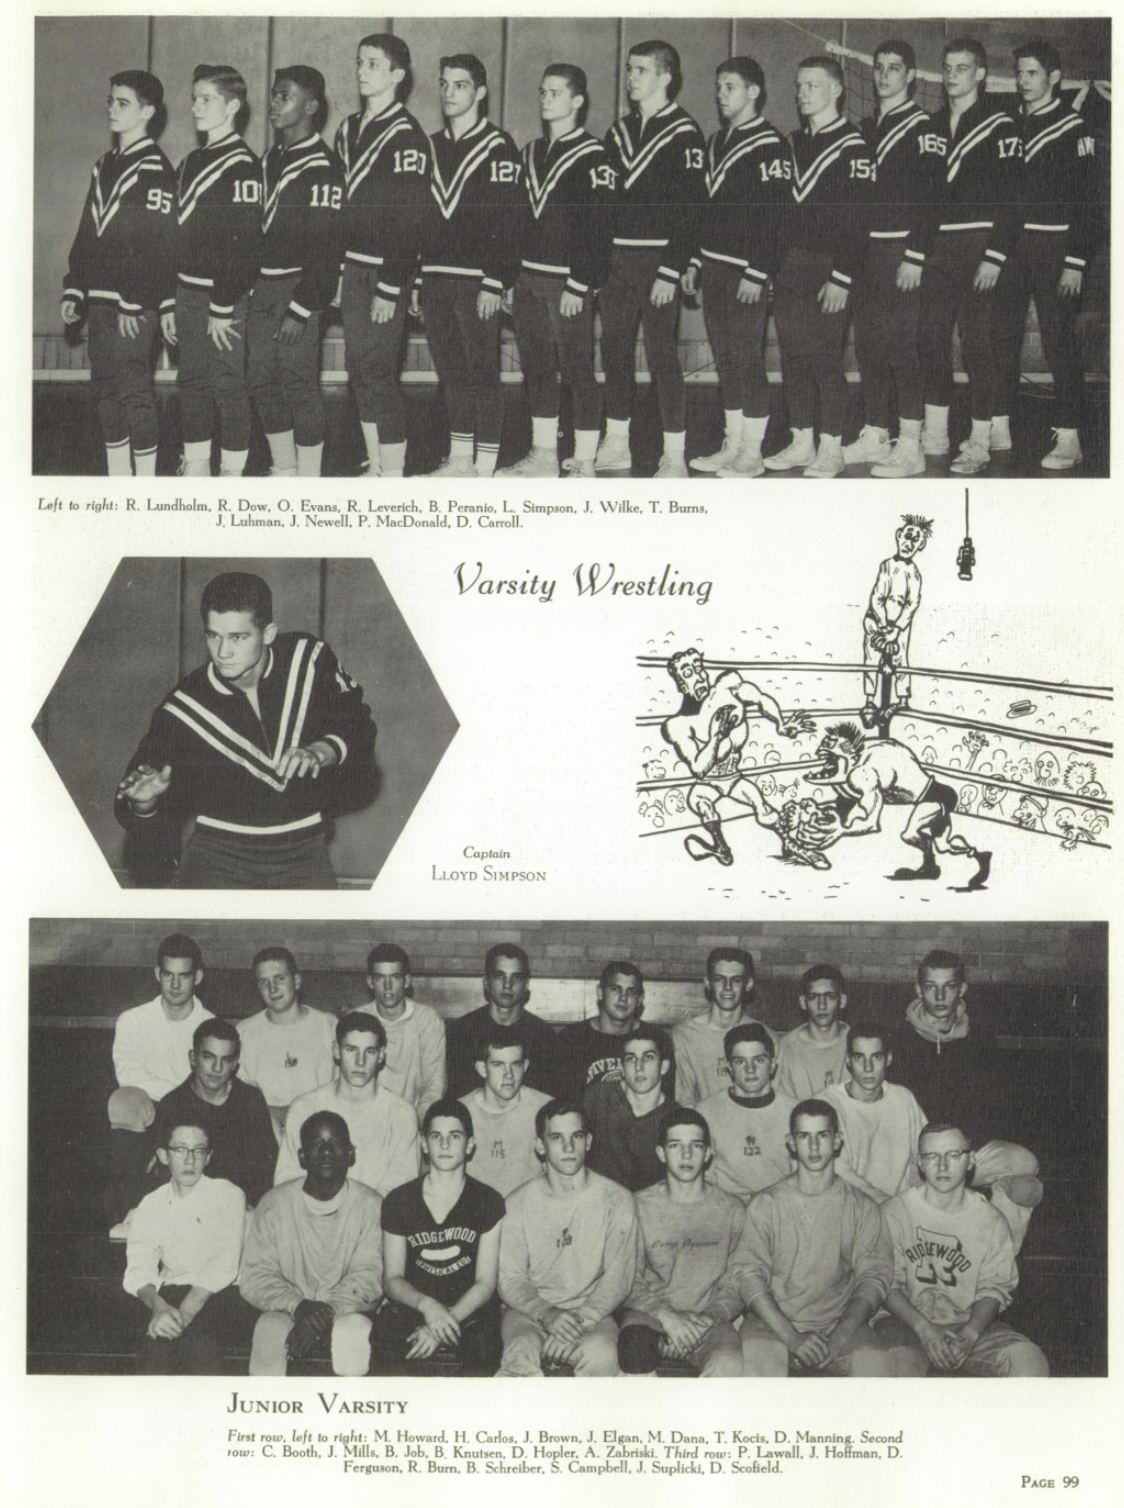 1962 Boys’ Wrestling Team